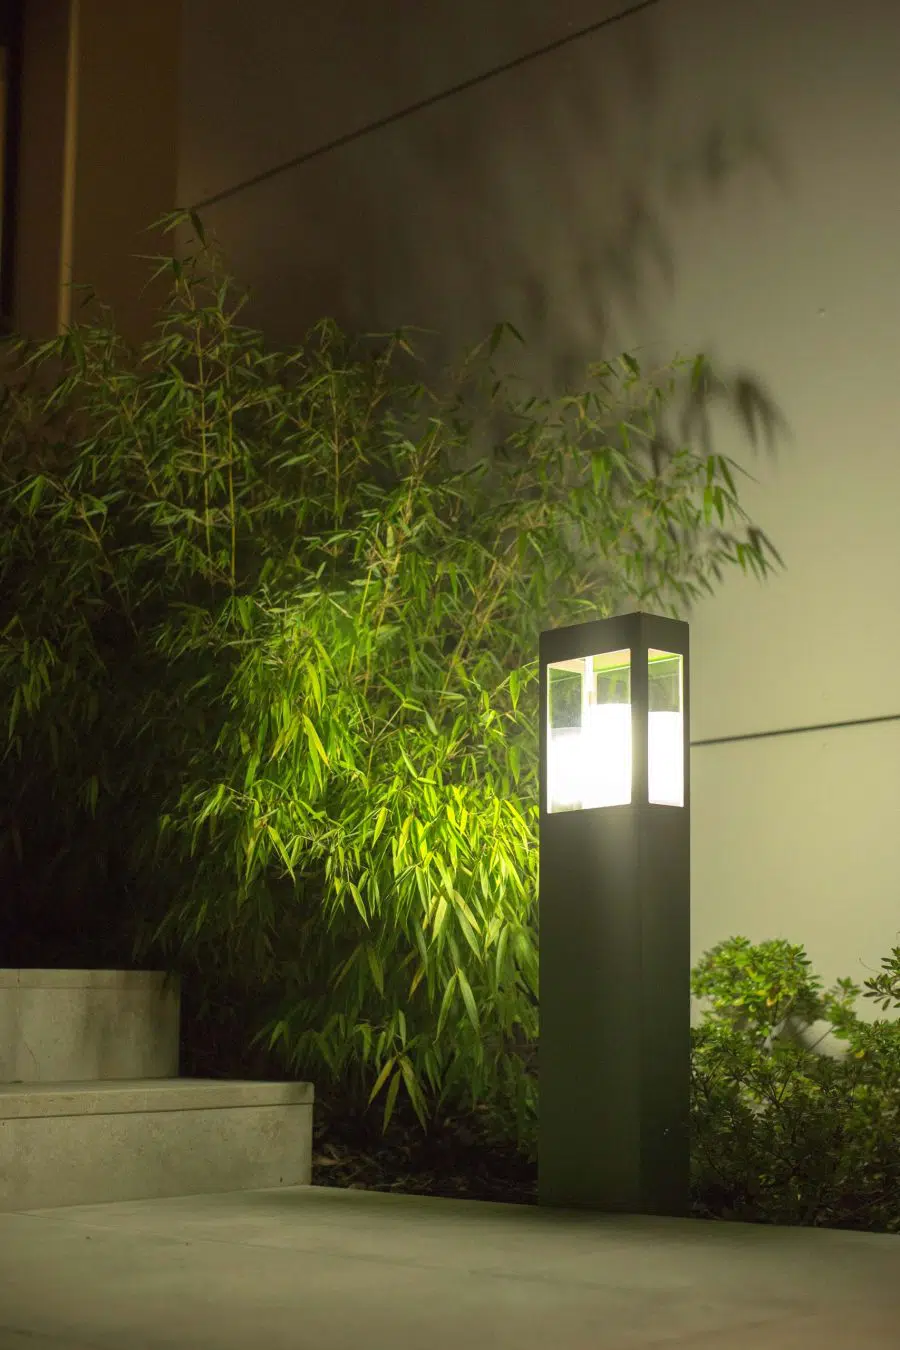 Brick tuinverlichting roger pradier buitenlamp tuinextra kaatsheuvel